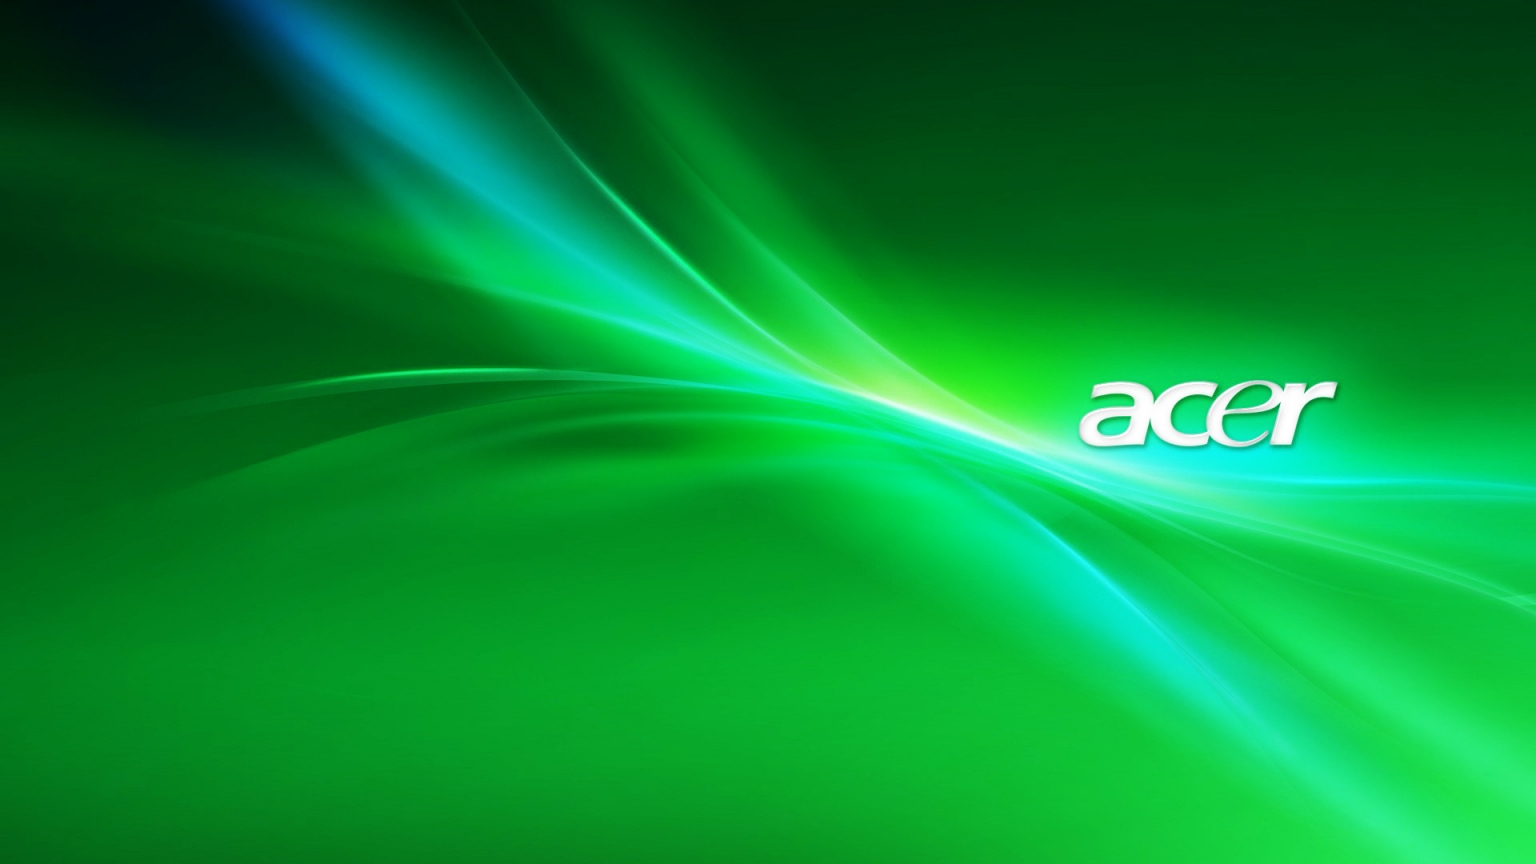 Acer Green for 1536 x 864 HDTV resolution